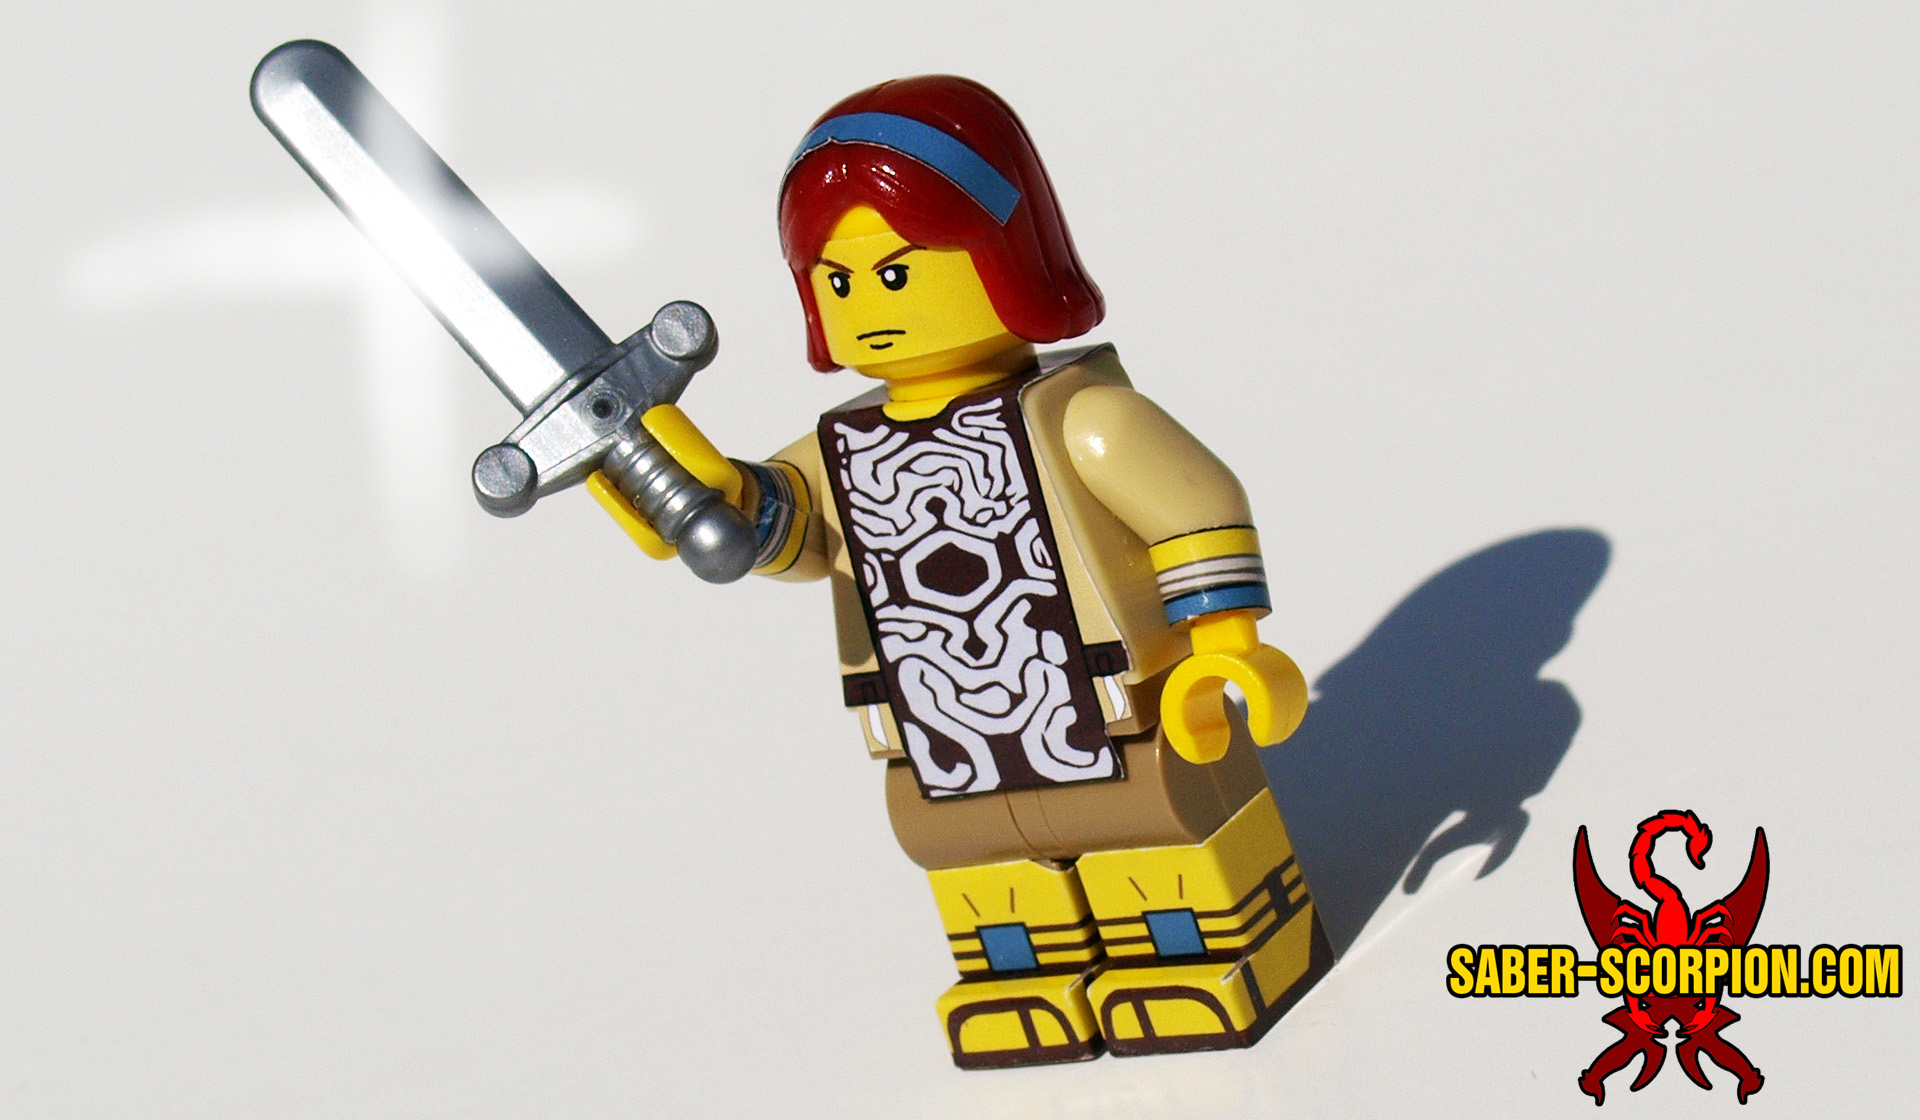 Colossus Warrior of the Wander Shadow Custom LEGO Minifig